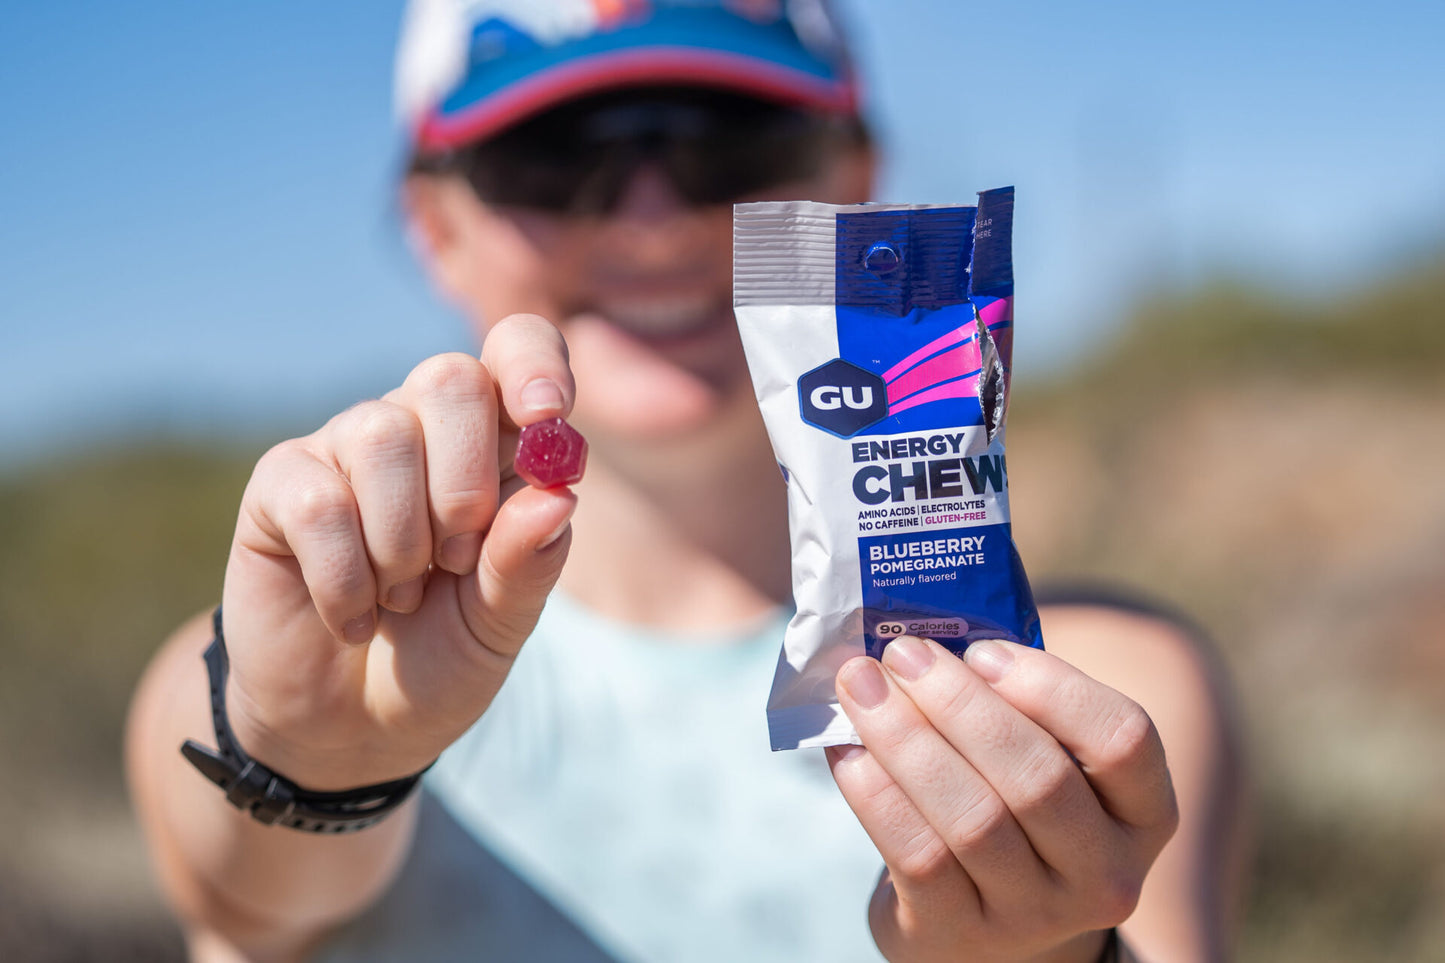 GU Energy Chews Strawberry 60g